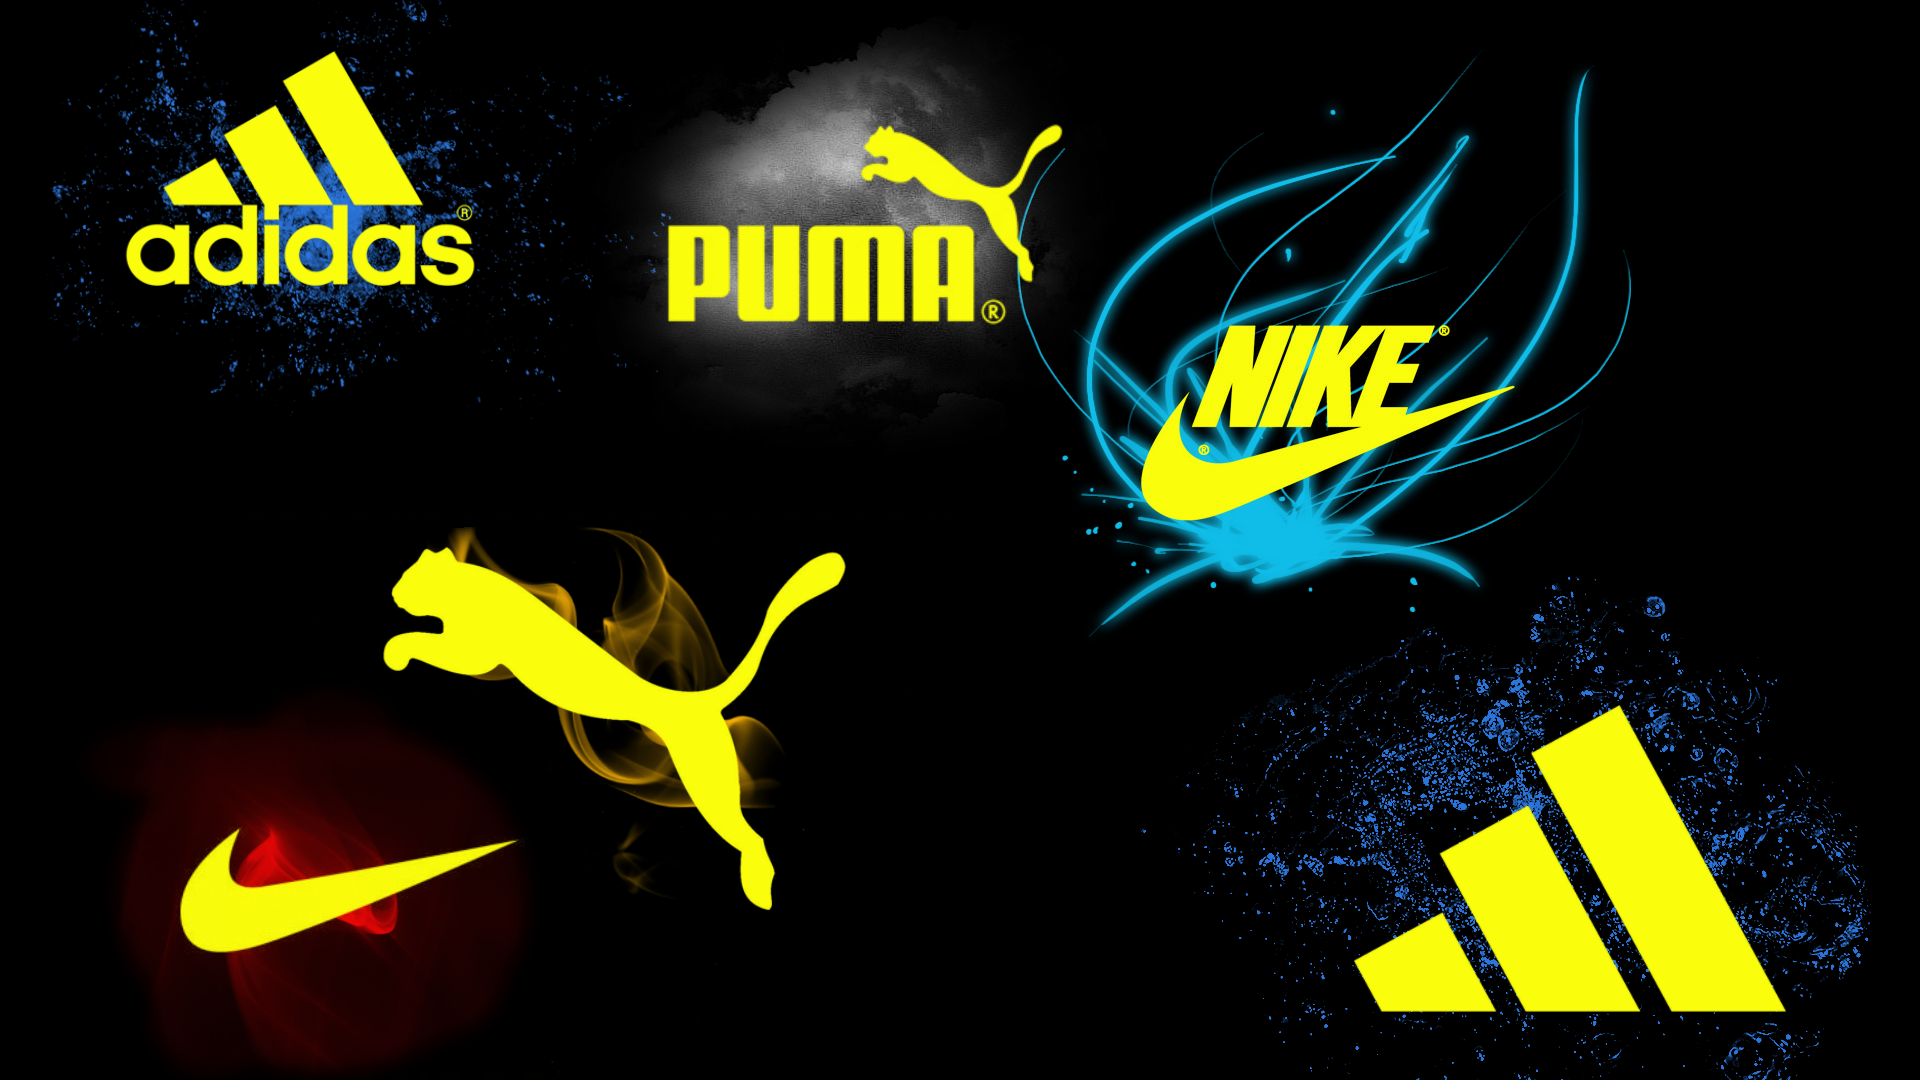 Nike Adidas Puma By Marijn55